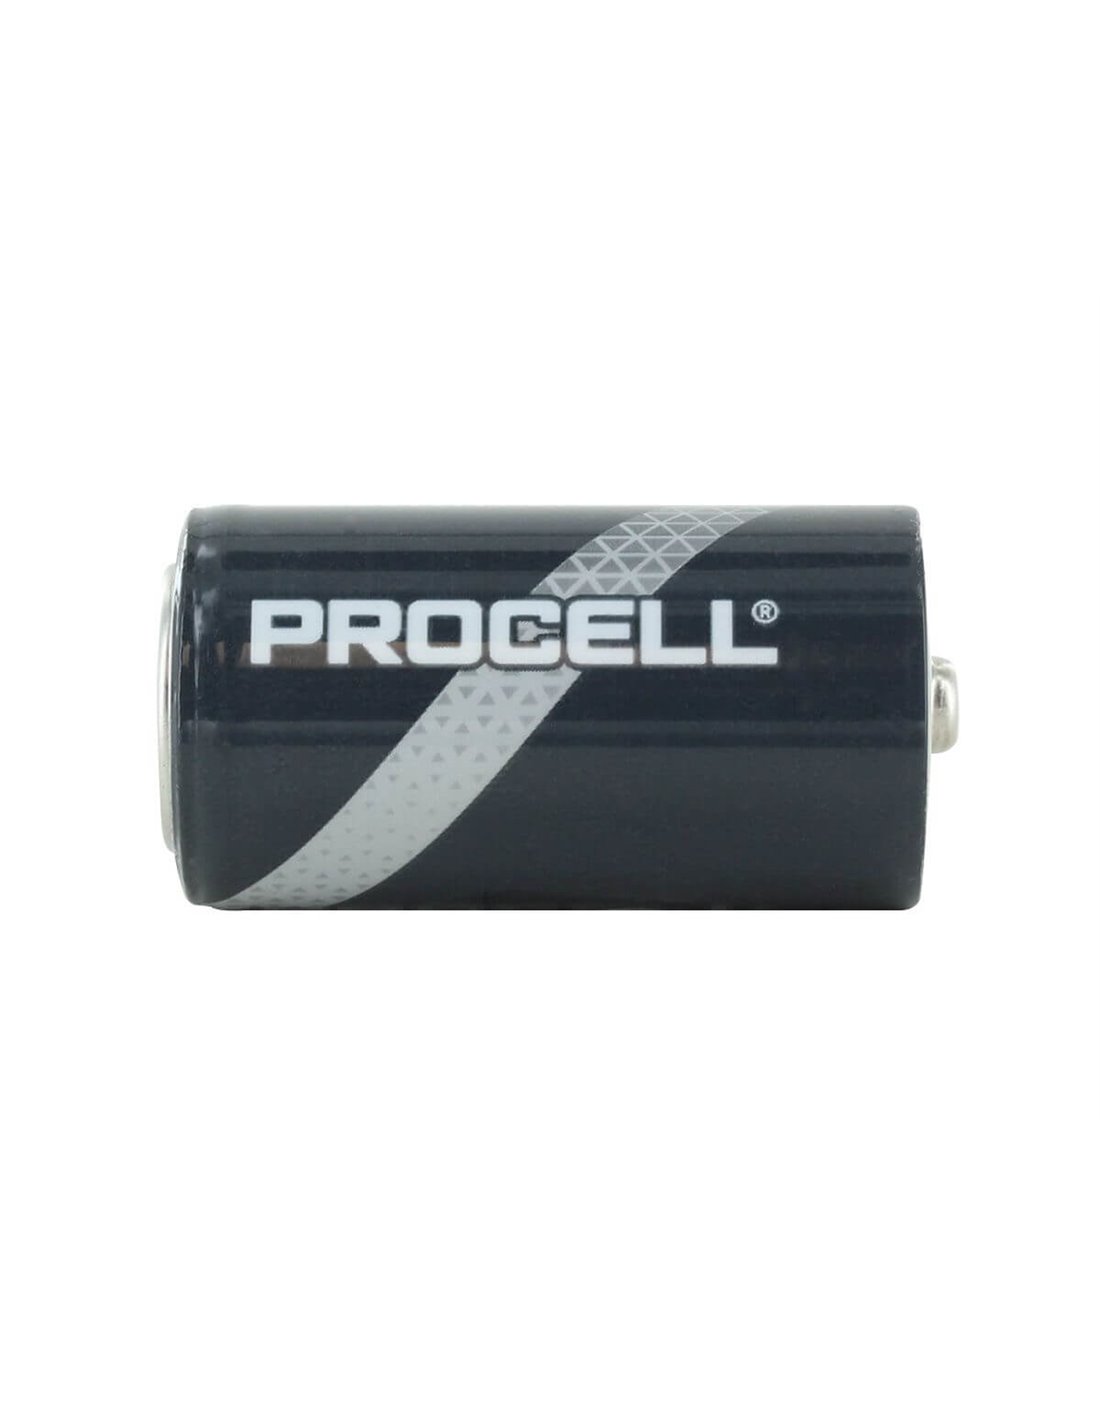 Duracell C Procell Alkaline Batteries model PC1400 - Non Rechargeable